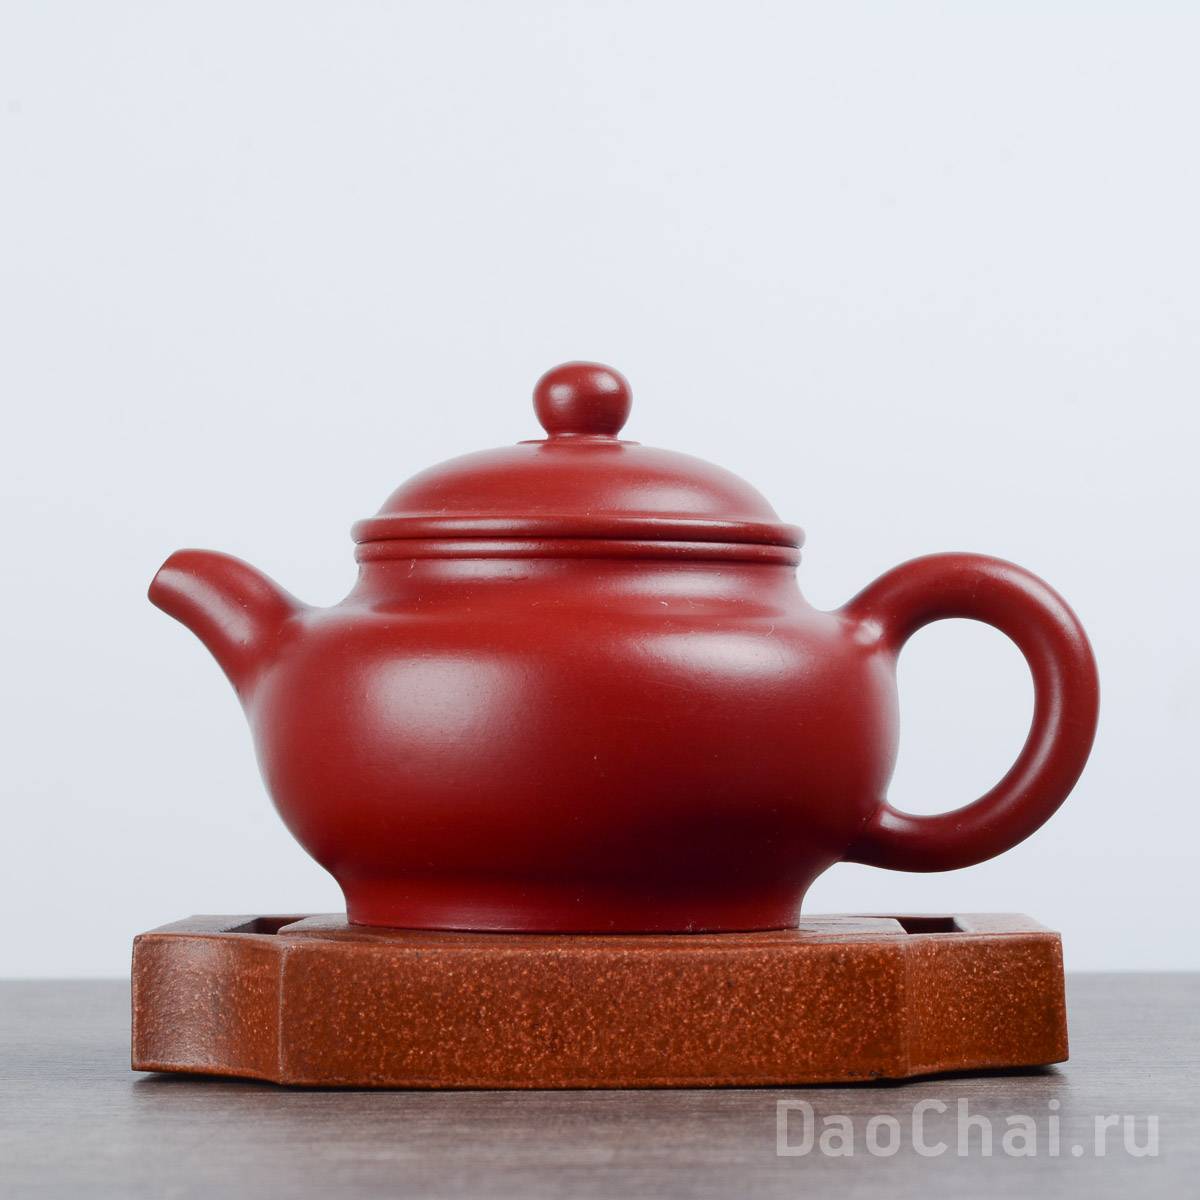 Чайник "Дуо Чжи", 100мл (79018)-